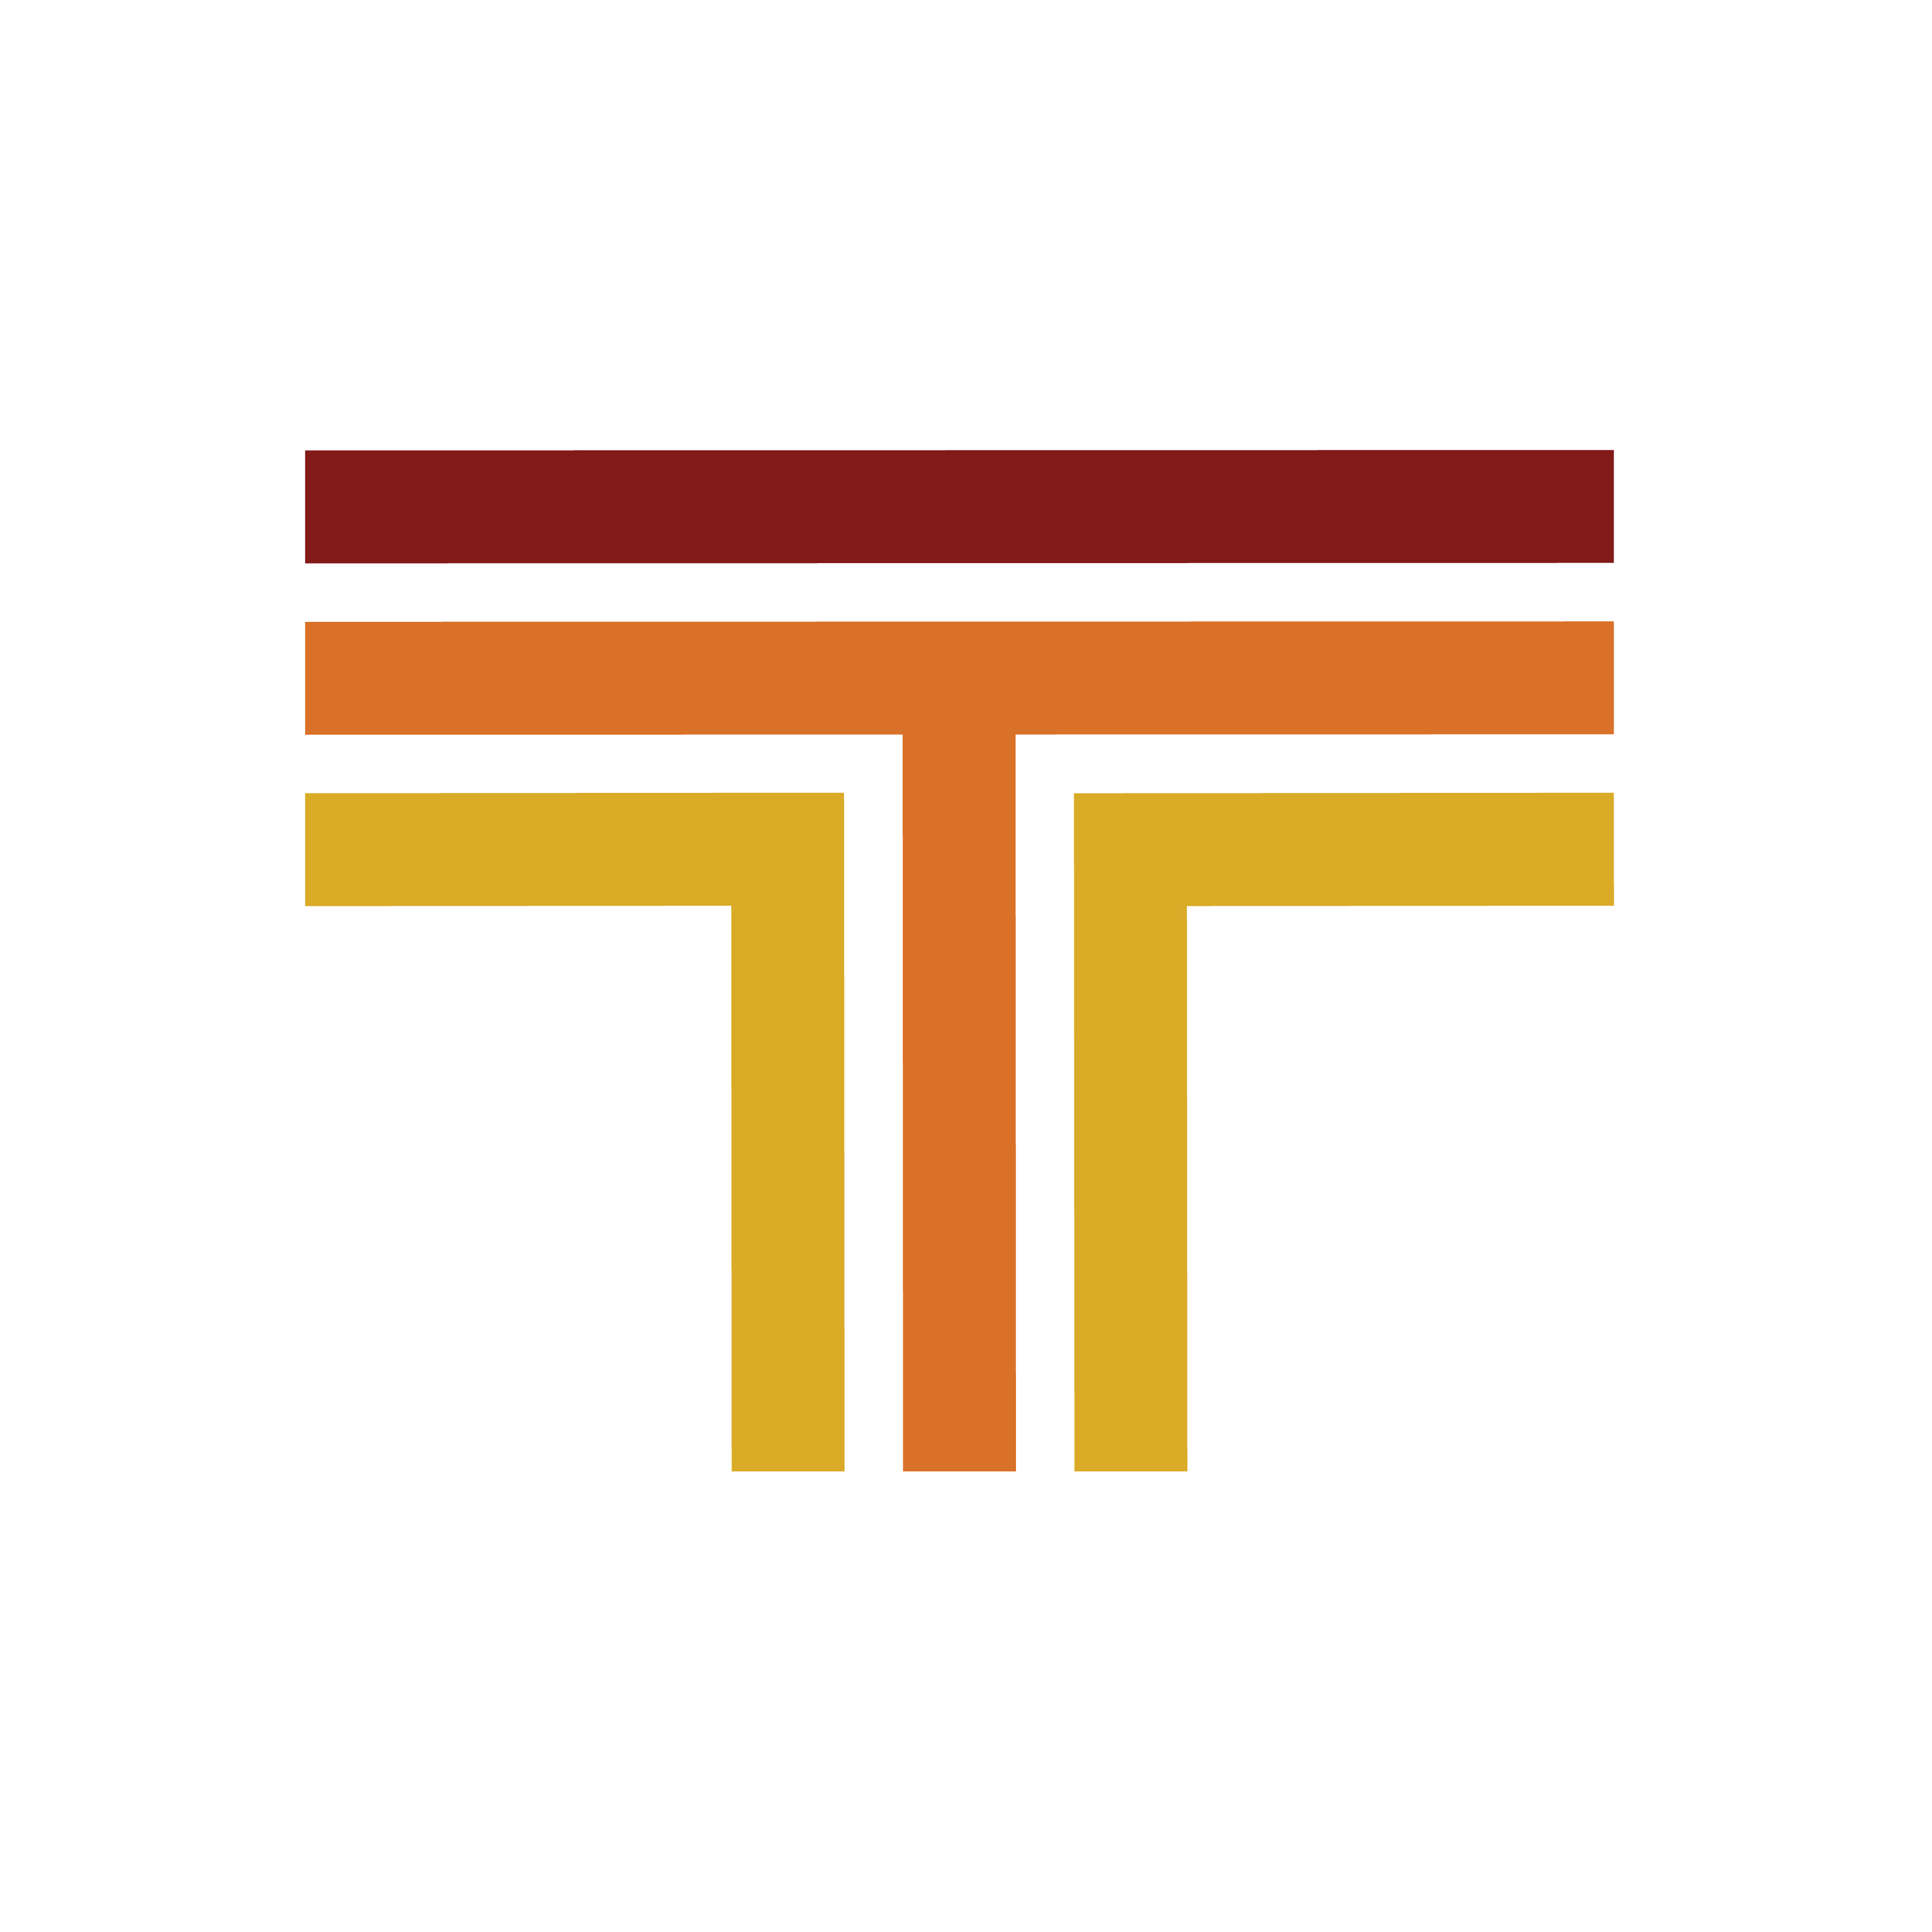 Taylor Flooring Mark  logo design by logo designer Stellen Design for your inspiration and for the worlds largest logo competition